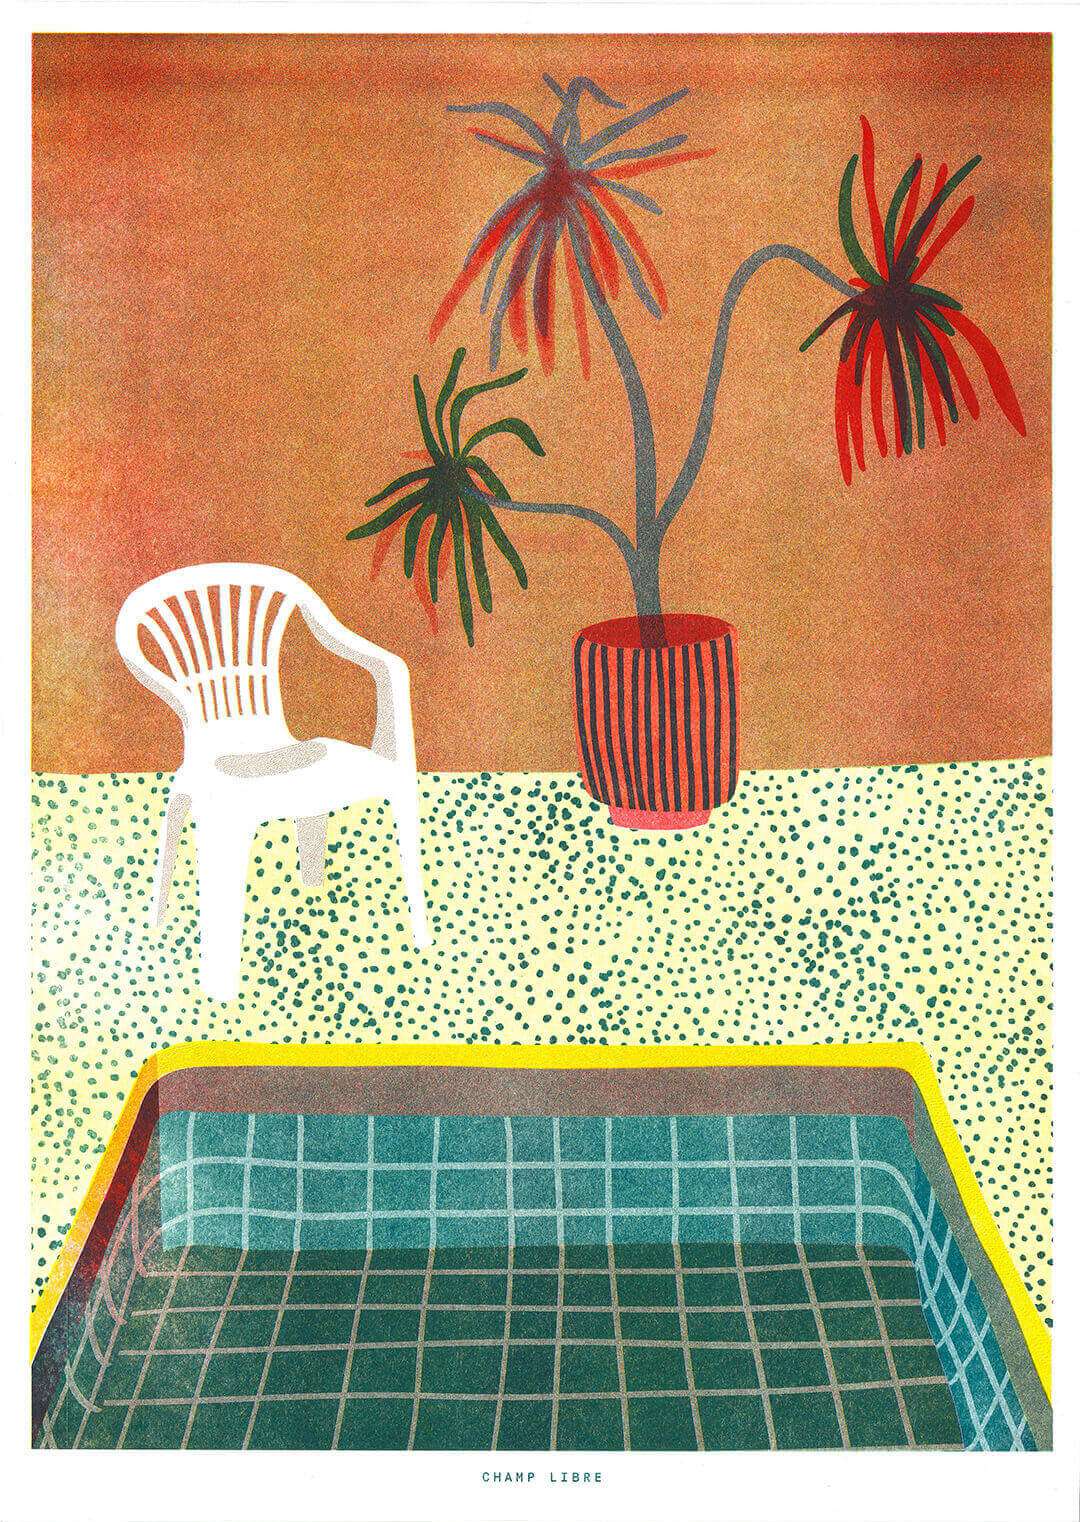 affiche de piscine design, illustration contemporaine